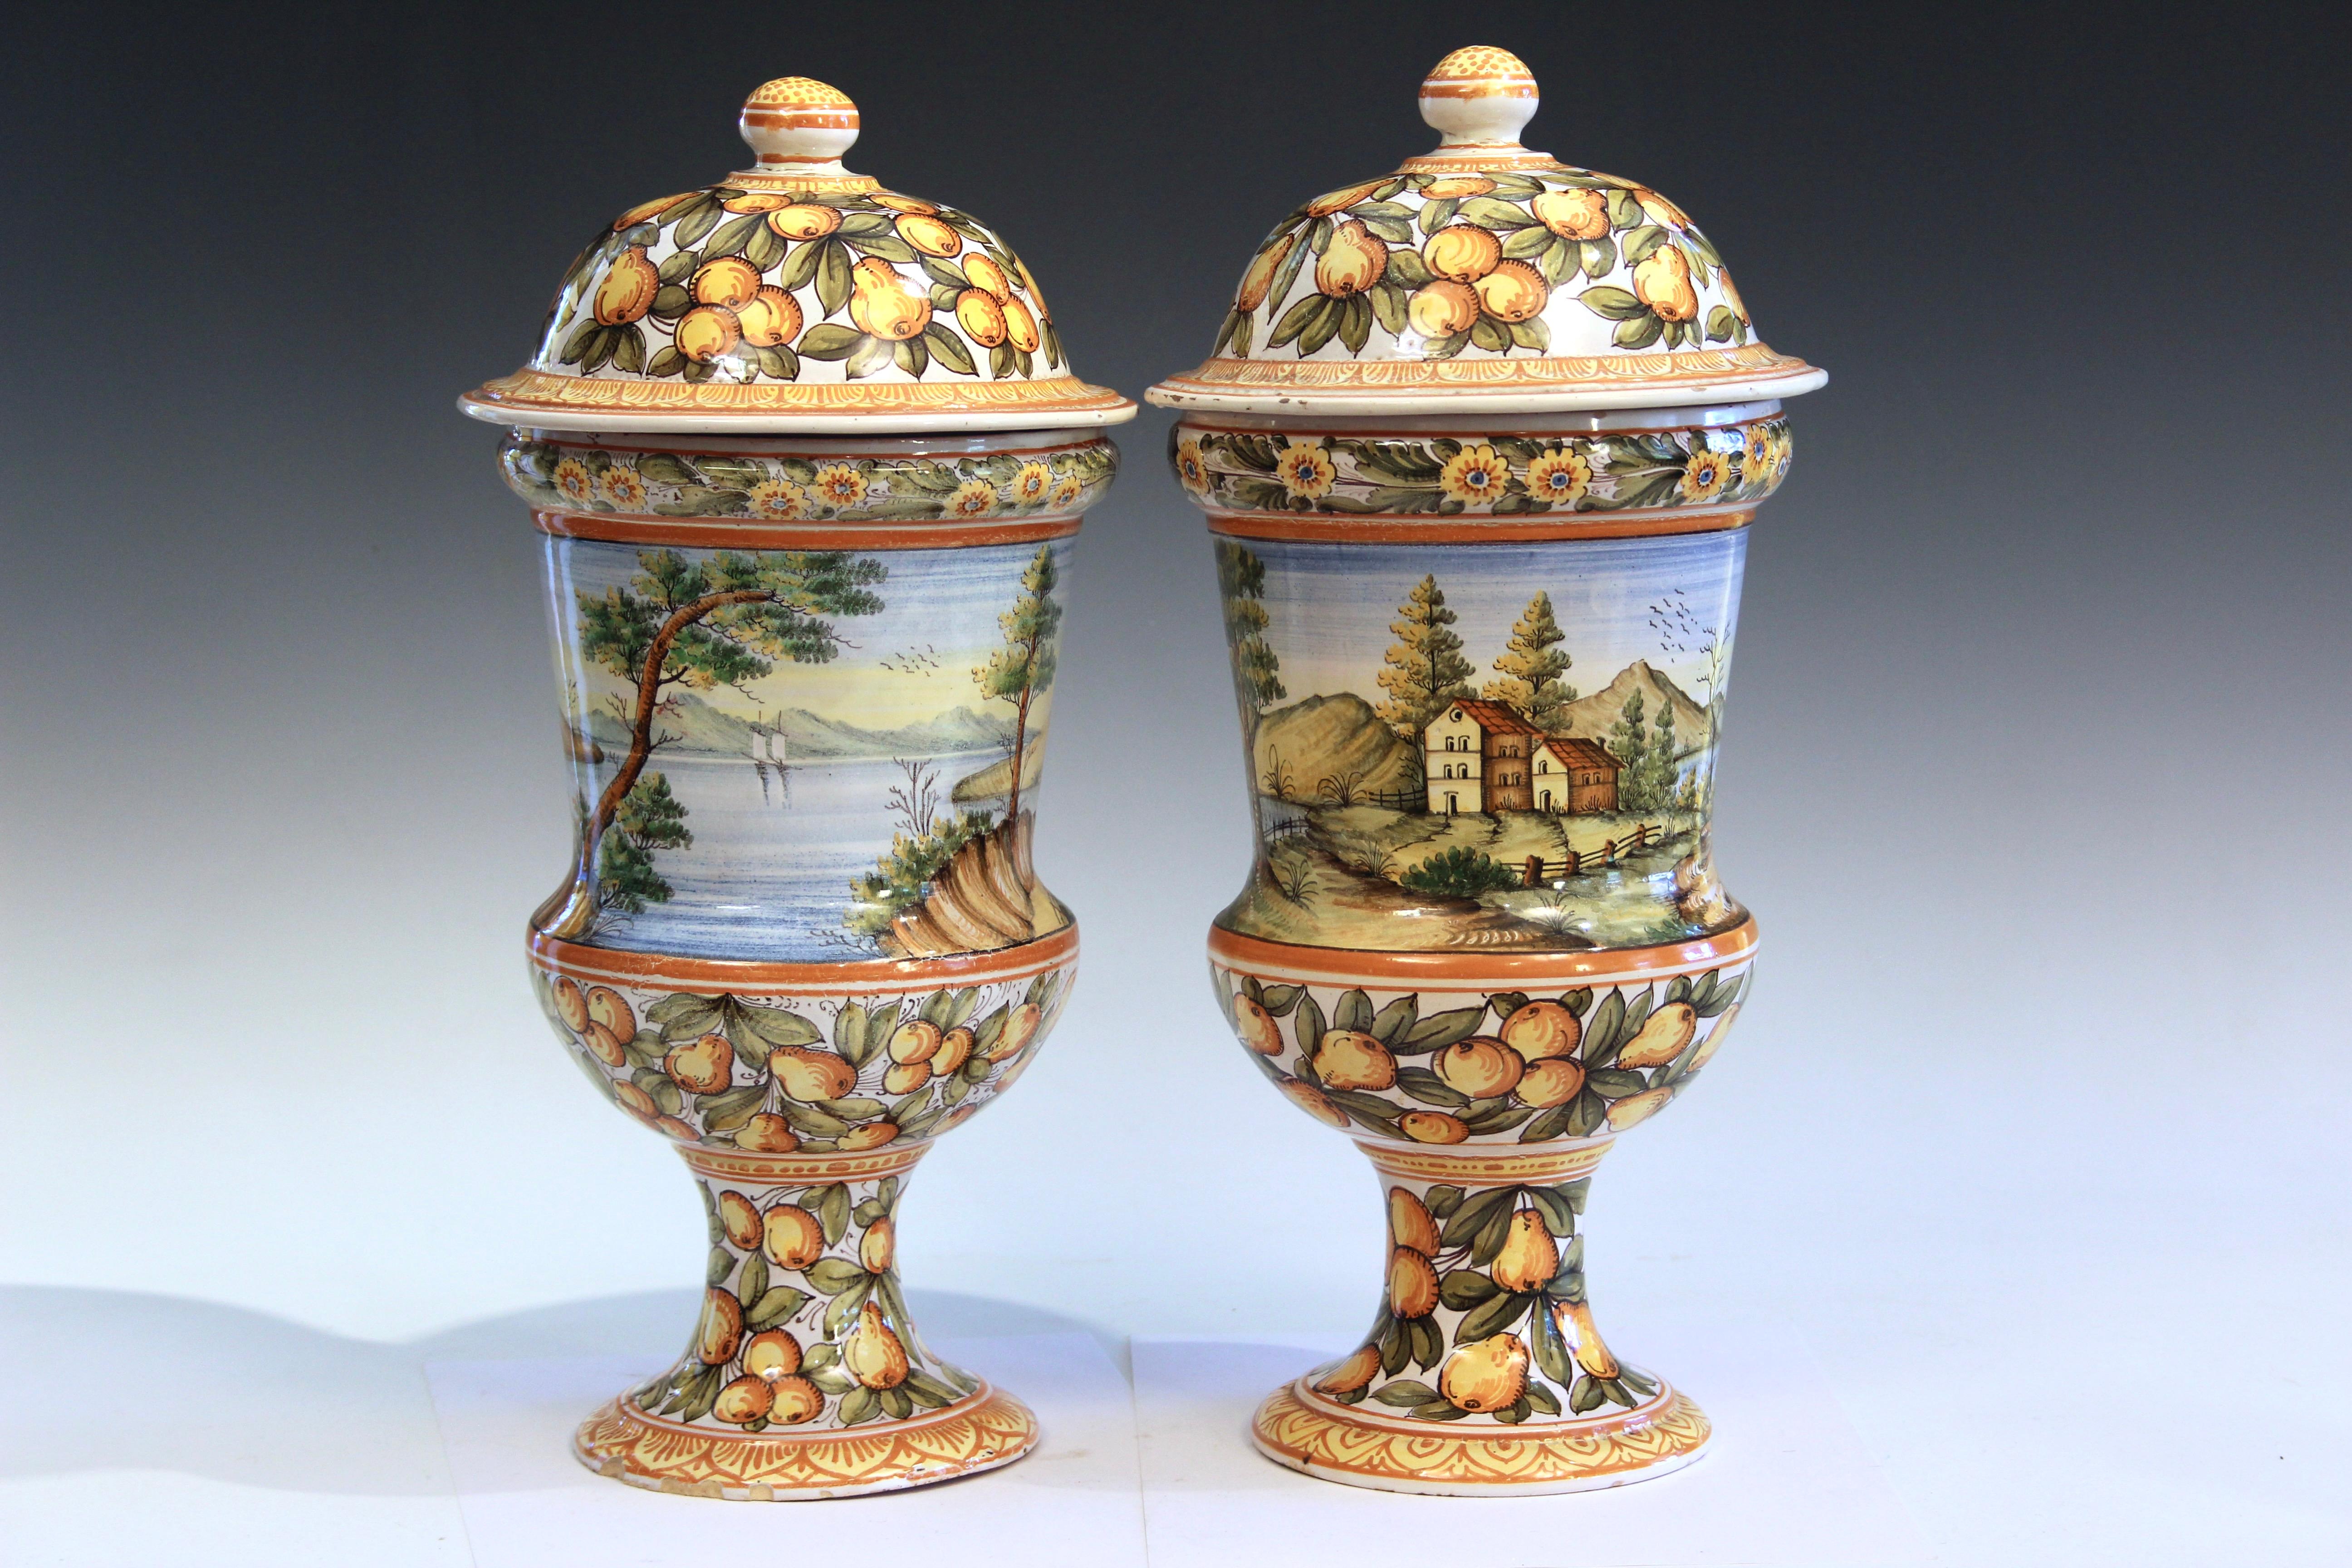 Renaissance Antique Deruta Pottery Pair Urns Covers Italian Vintage Majolica Vases Jars For Sale